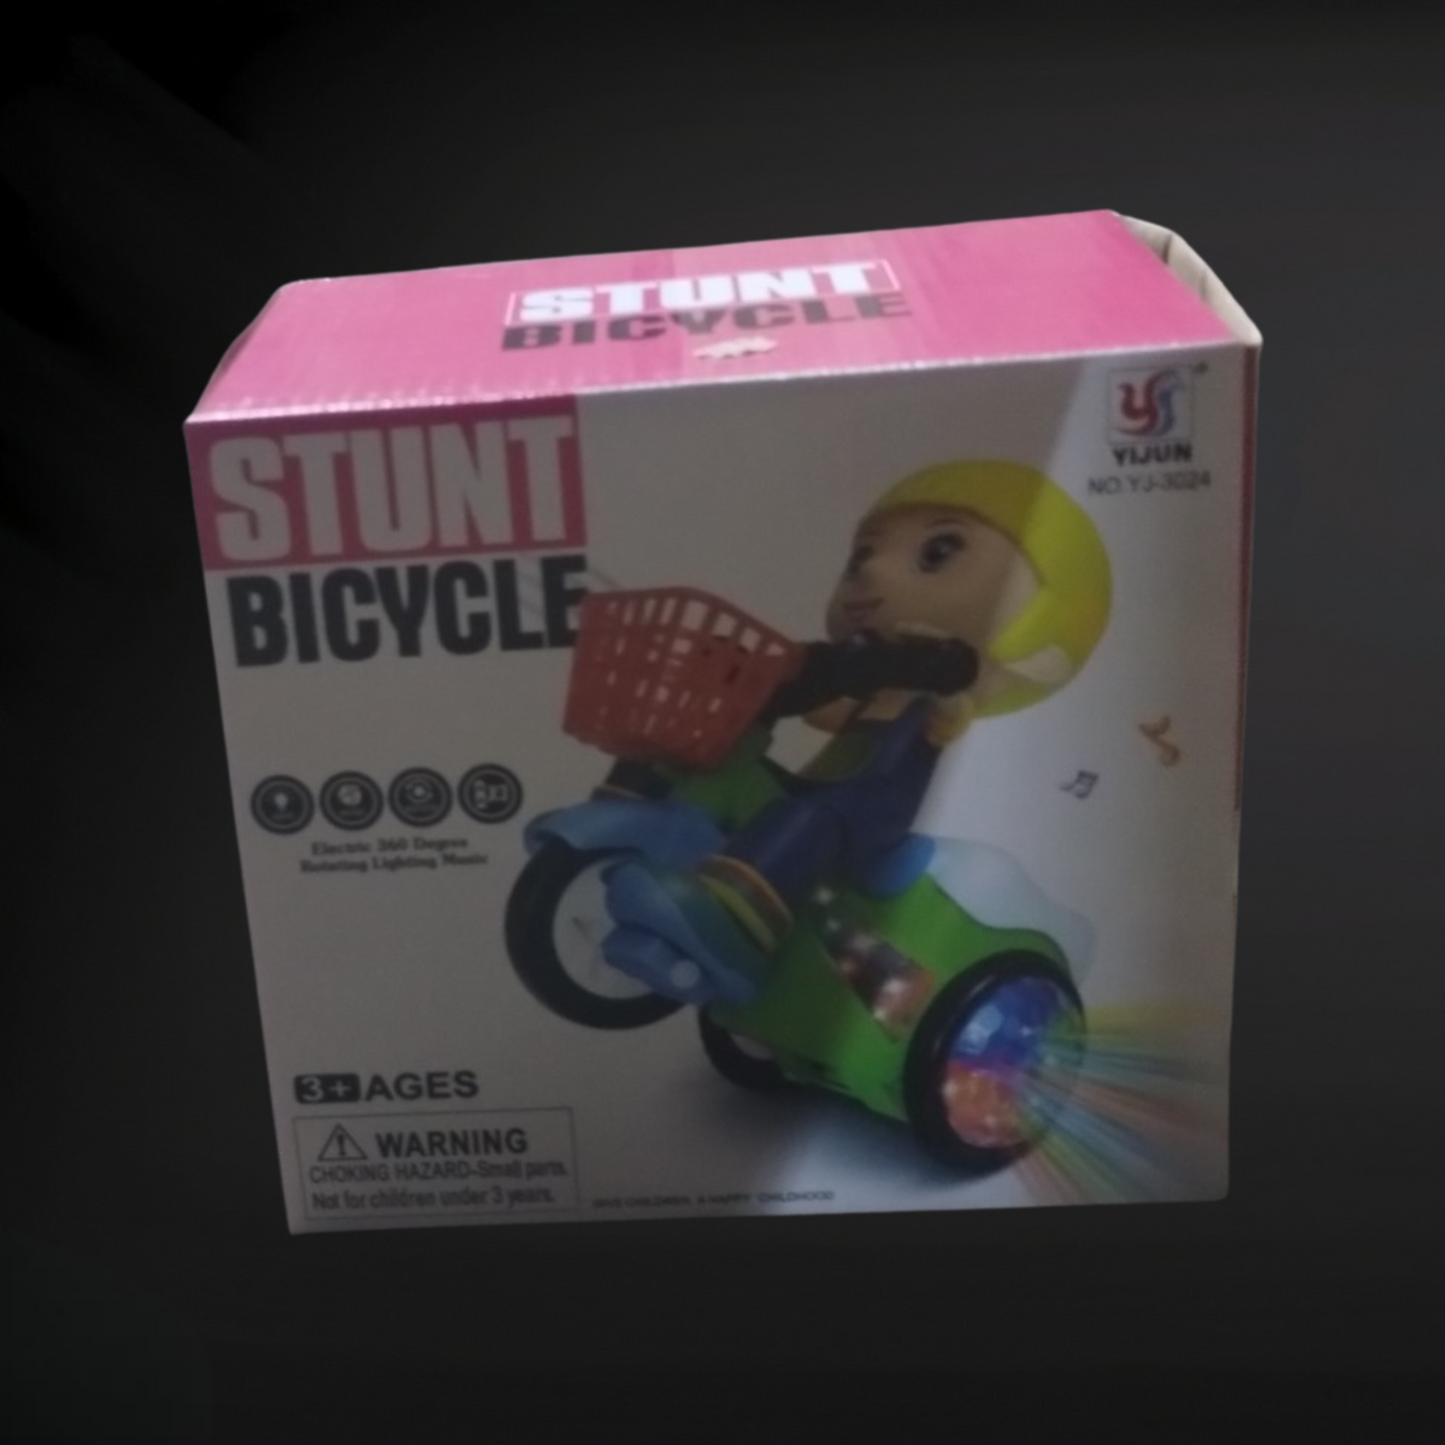 Stunt Bicycle / 03 Motorcyle - Singing and Moving - Zack Wholesale